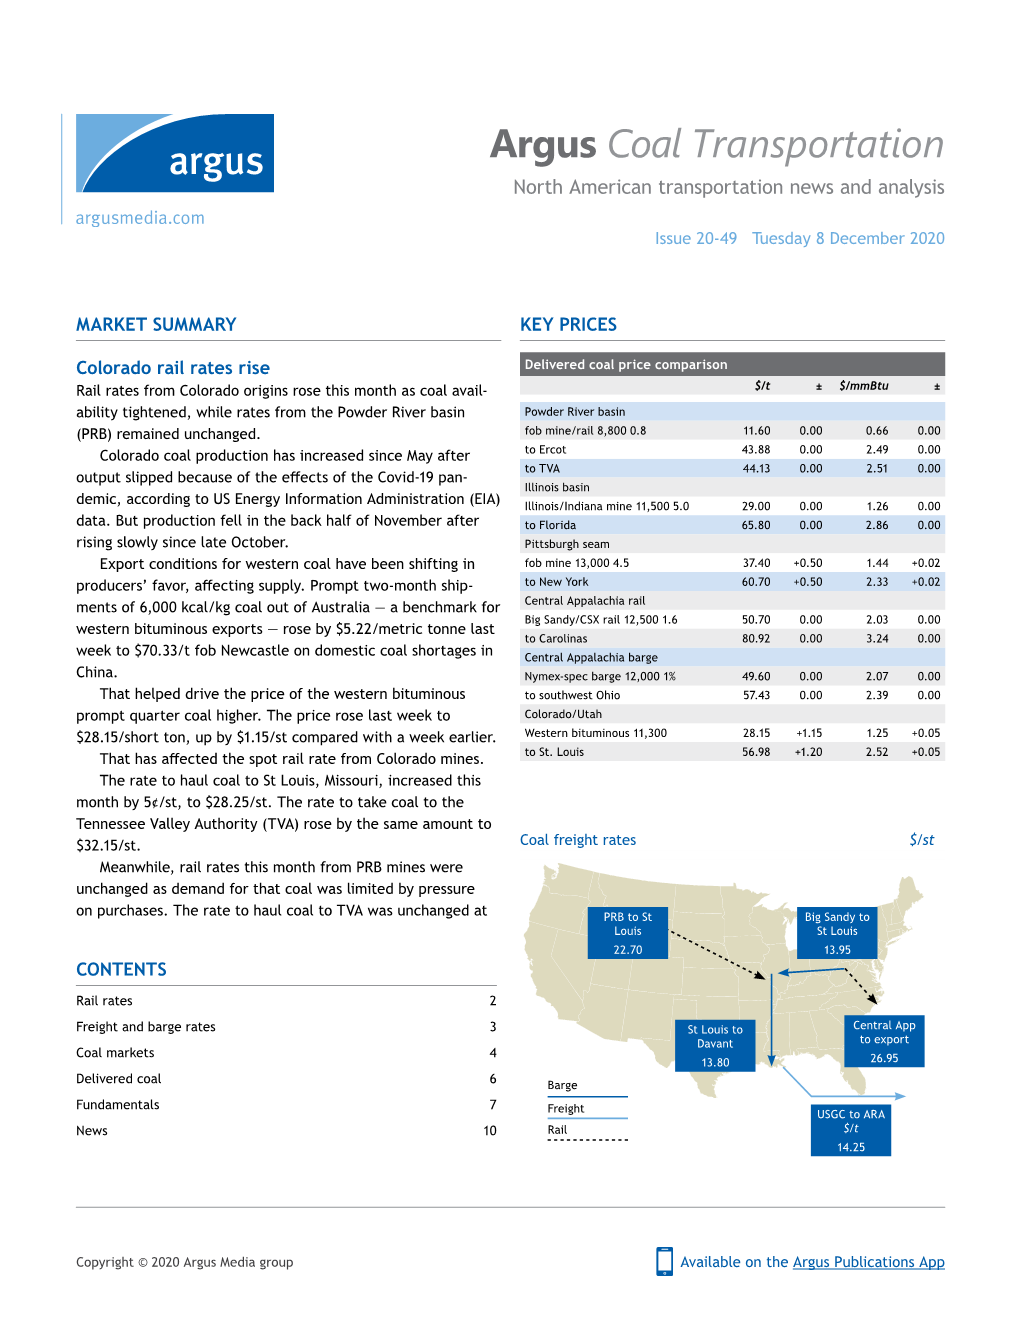 Argus Coal Transportation North American Transportation News and Analysis